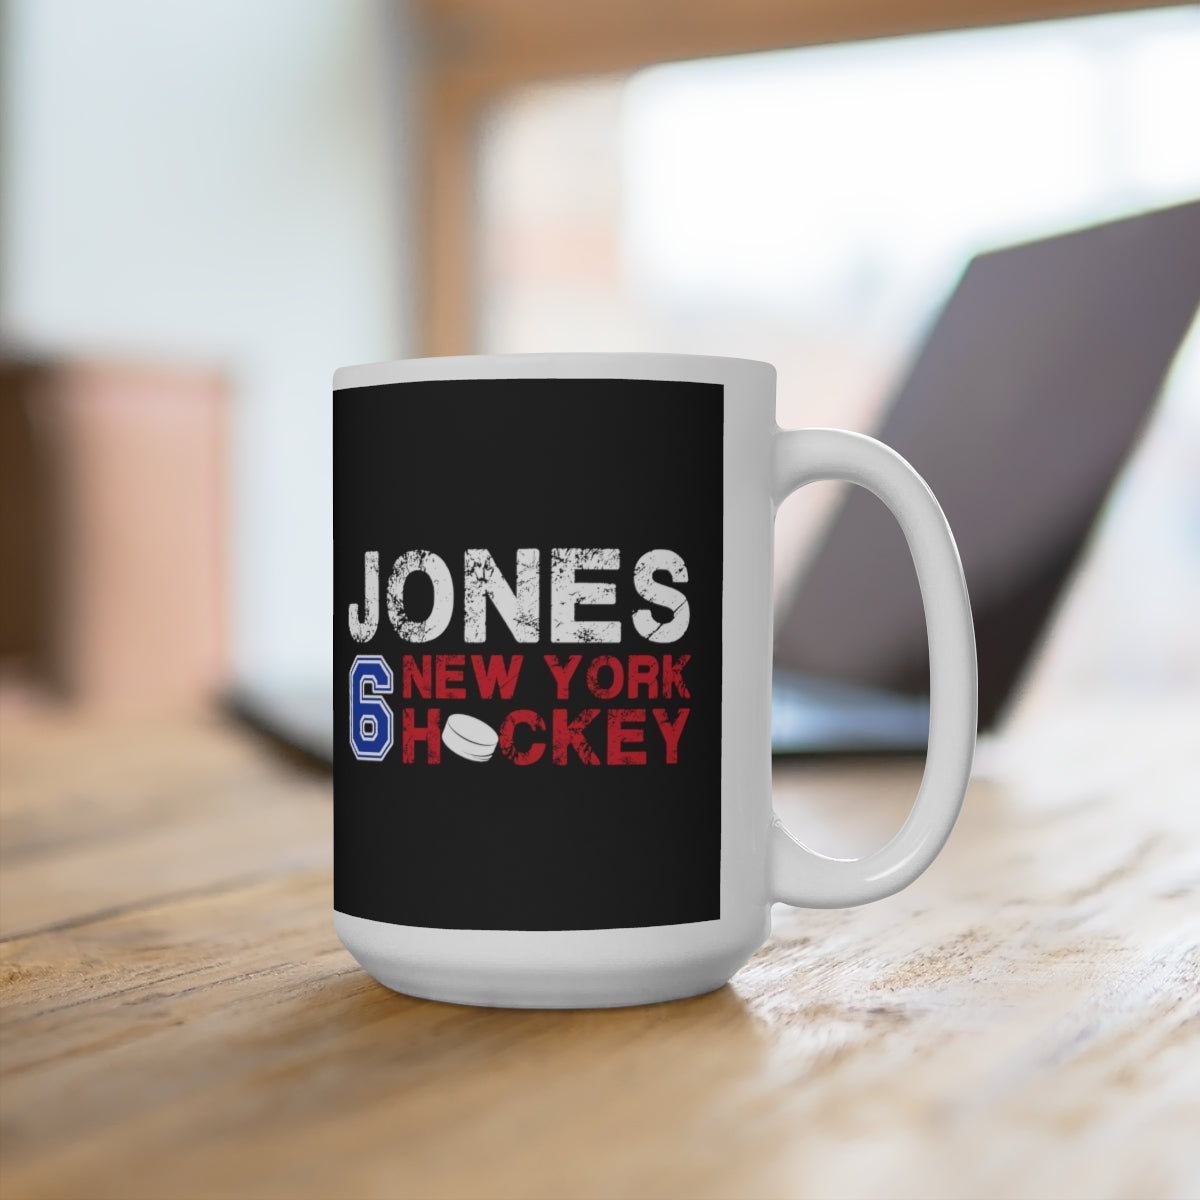 Jones 6 New York Hockey Ceramic Coffee Mug In Black, 15oz